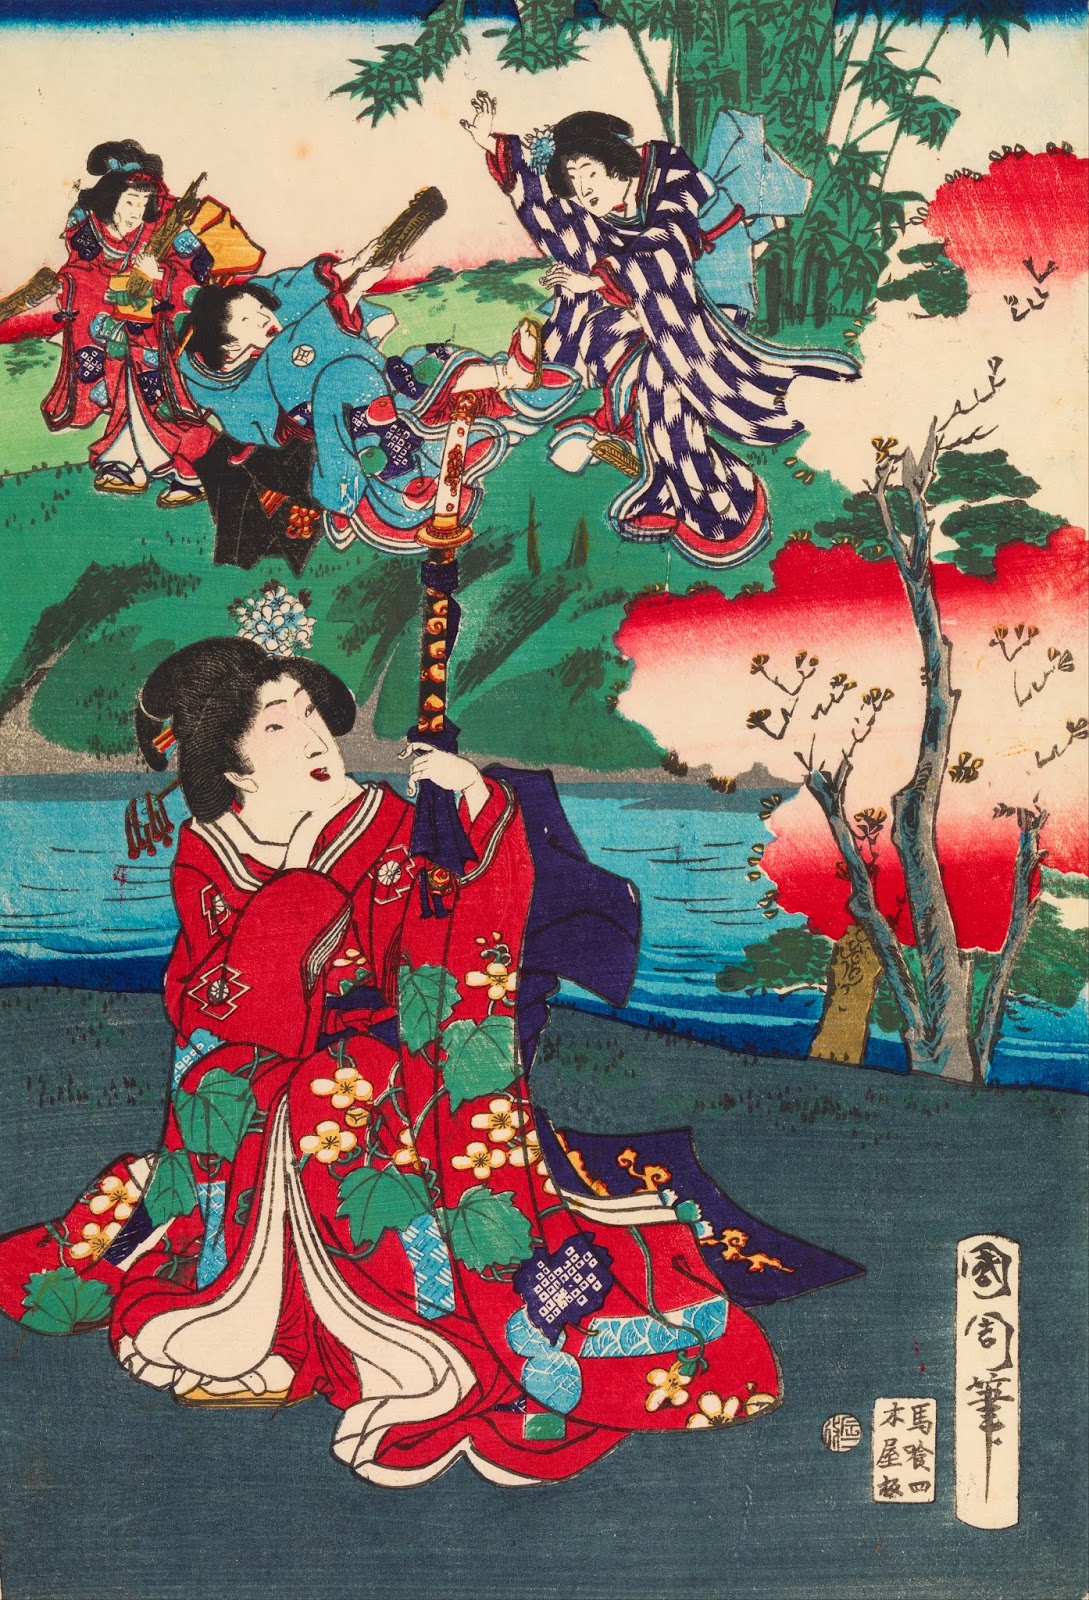 Povestea lui Genji by Toyohara Kunichika - 1868 - 252 x 365 mm 